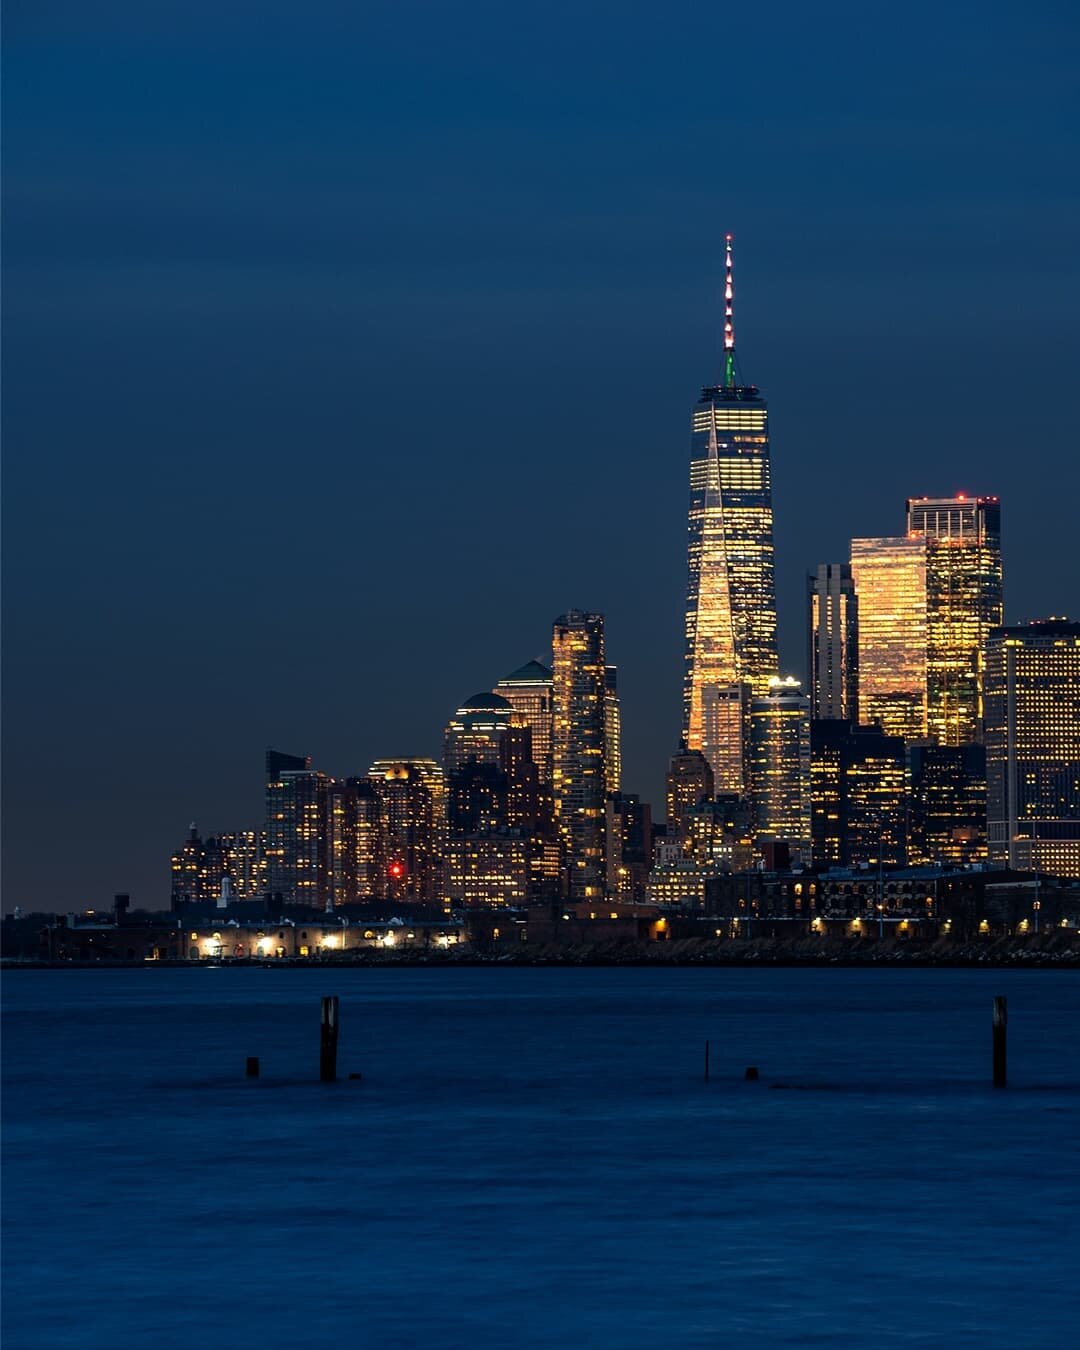 like night and day
.
.
.
#newyork #newyorkcity #ny #nyc #brooklyn #skyline #cityscape #cityscapes #citylights #waterfront #nightphotography #longexposure